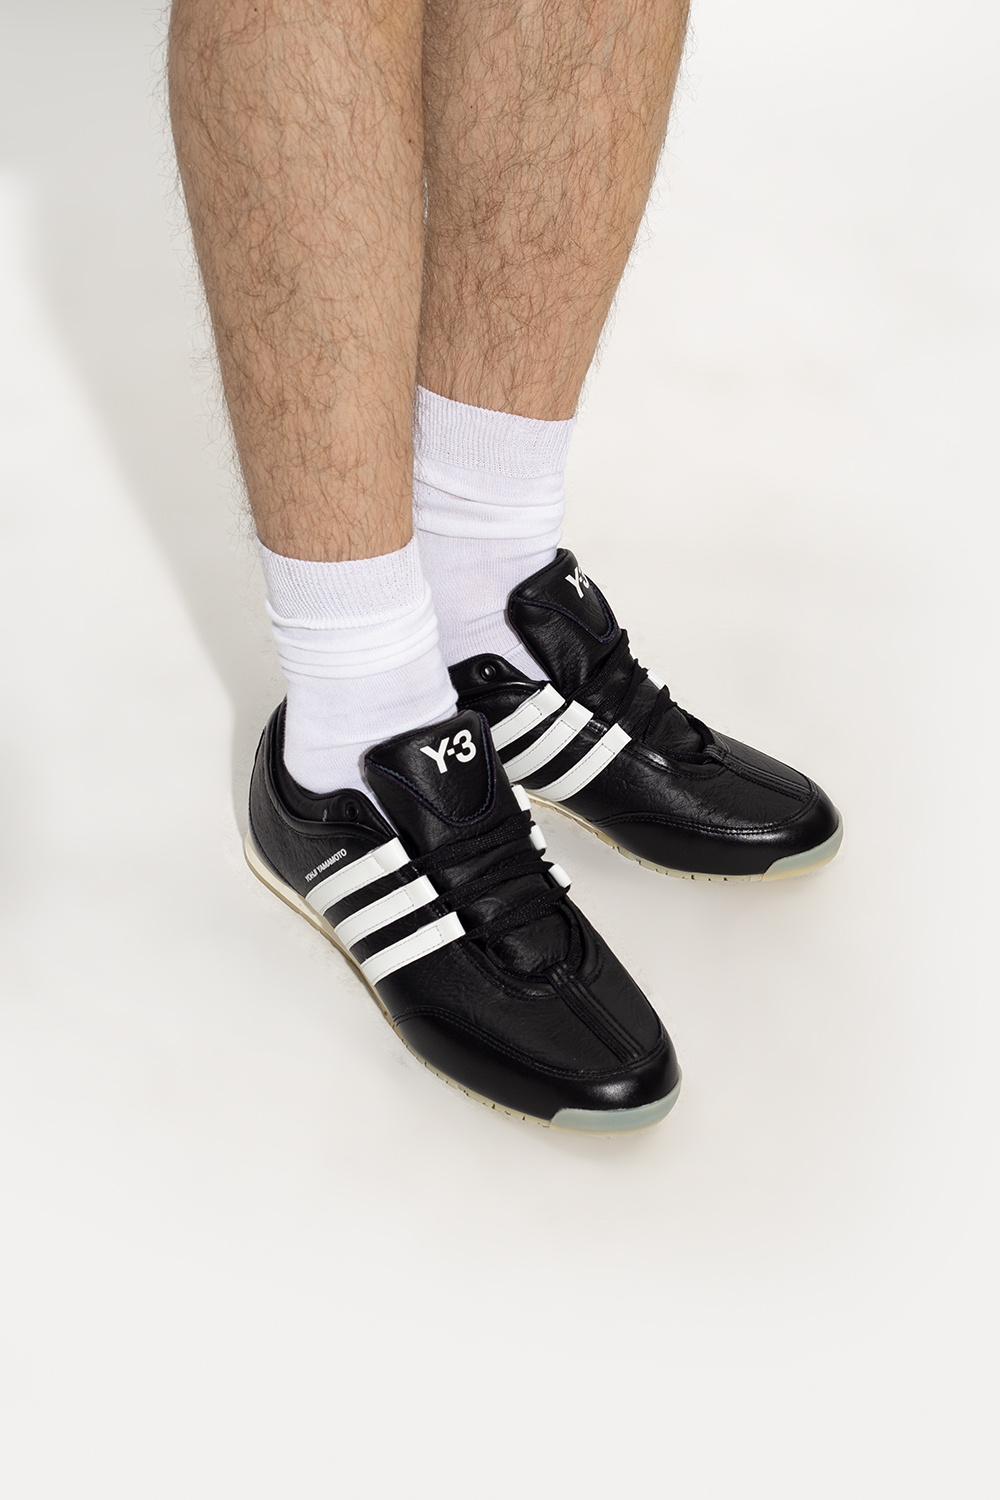 Waarnemen vorst behuizing IetpShops - all black boots | 3 Yohji Yamamoto 'Boxing' sneakers - Men's  Shoes | Y